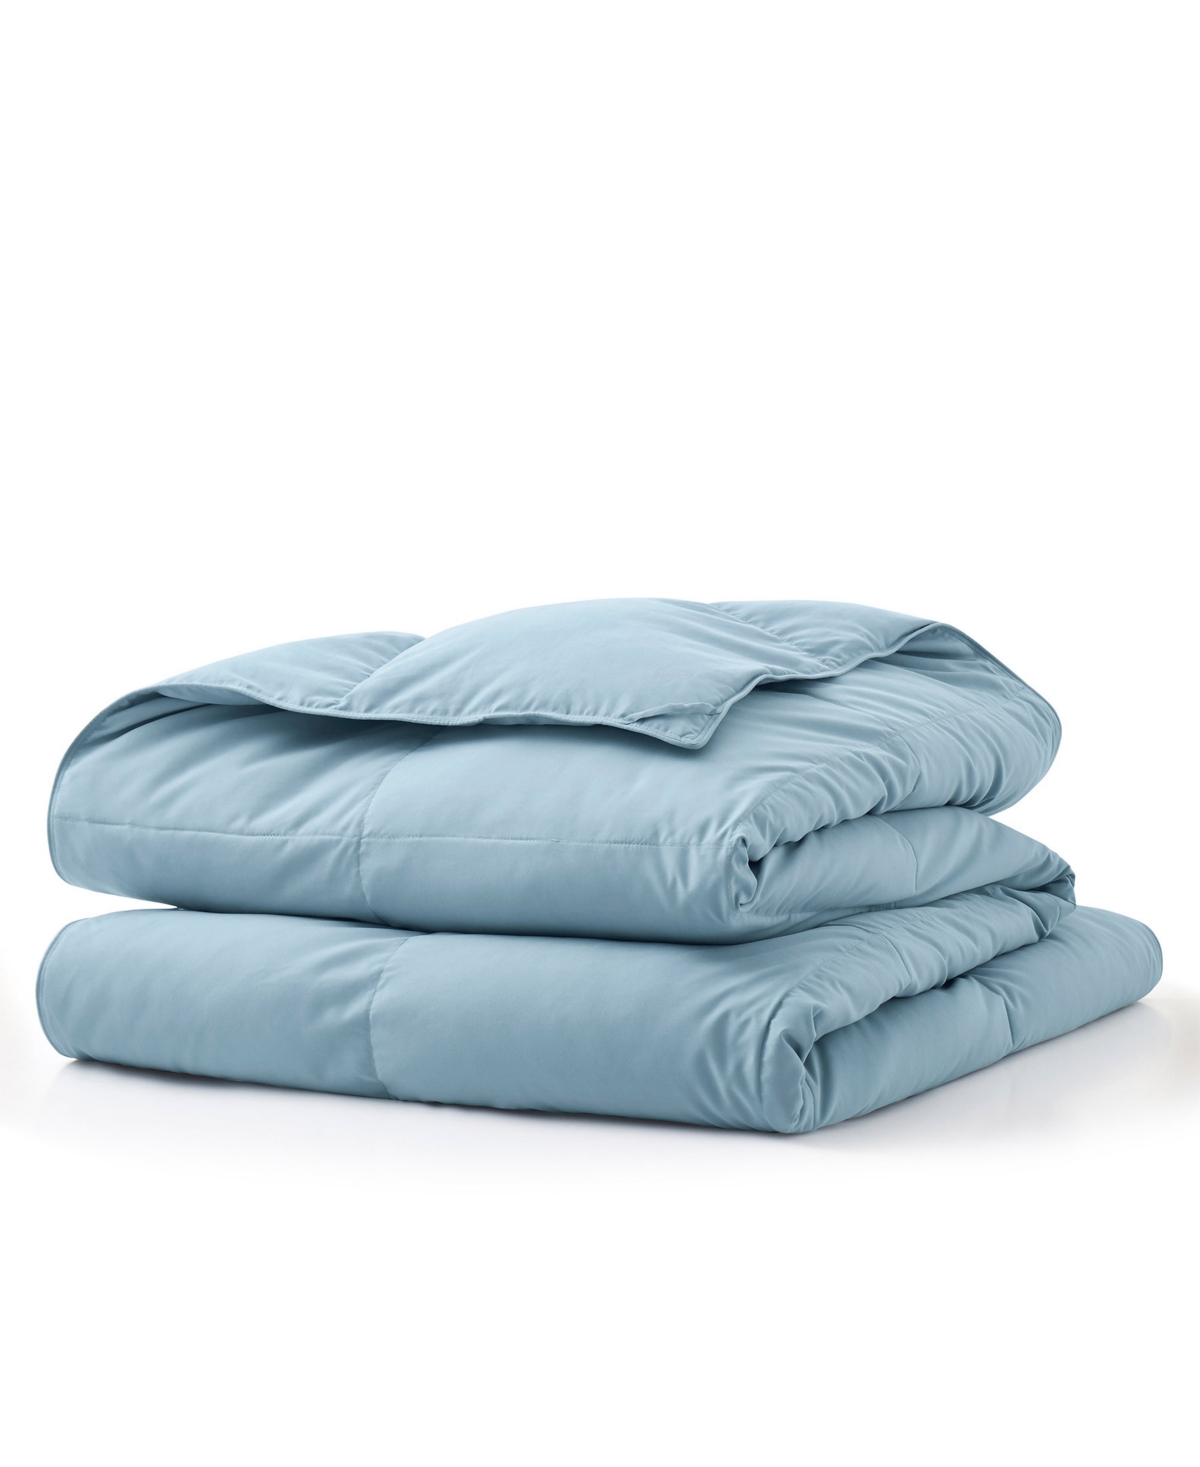 Unikome All Season 300 Thread Count Cotton Goose Down Fiber Comforter, King In Steel Blue